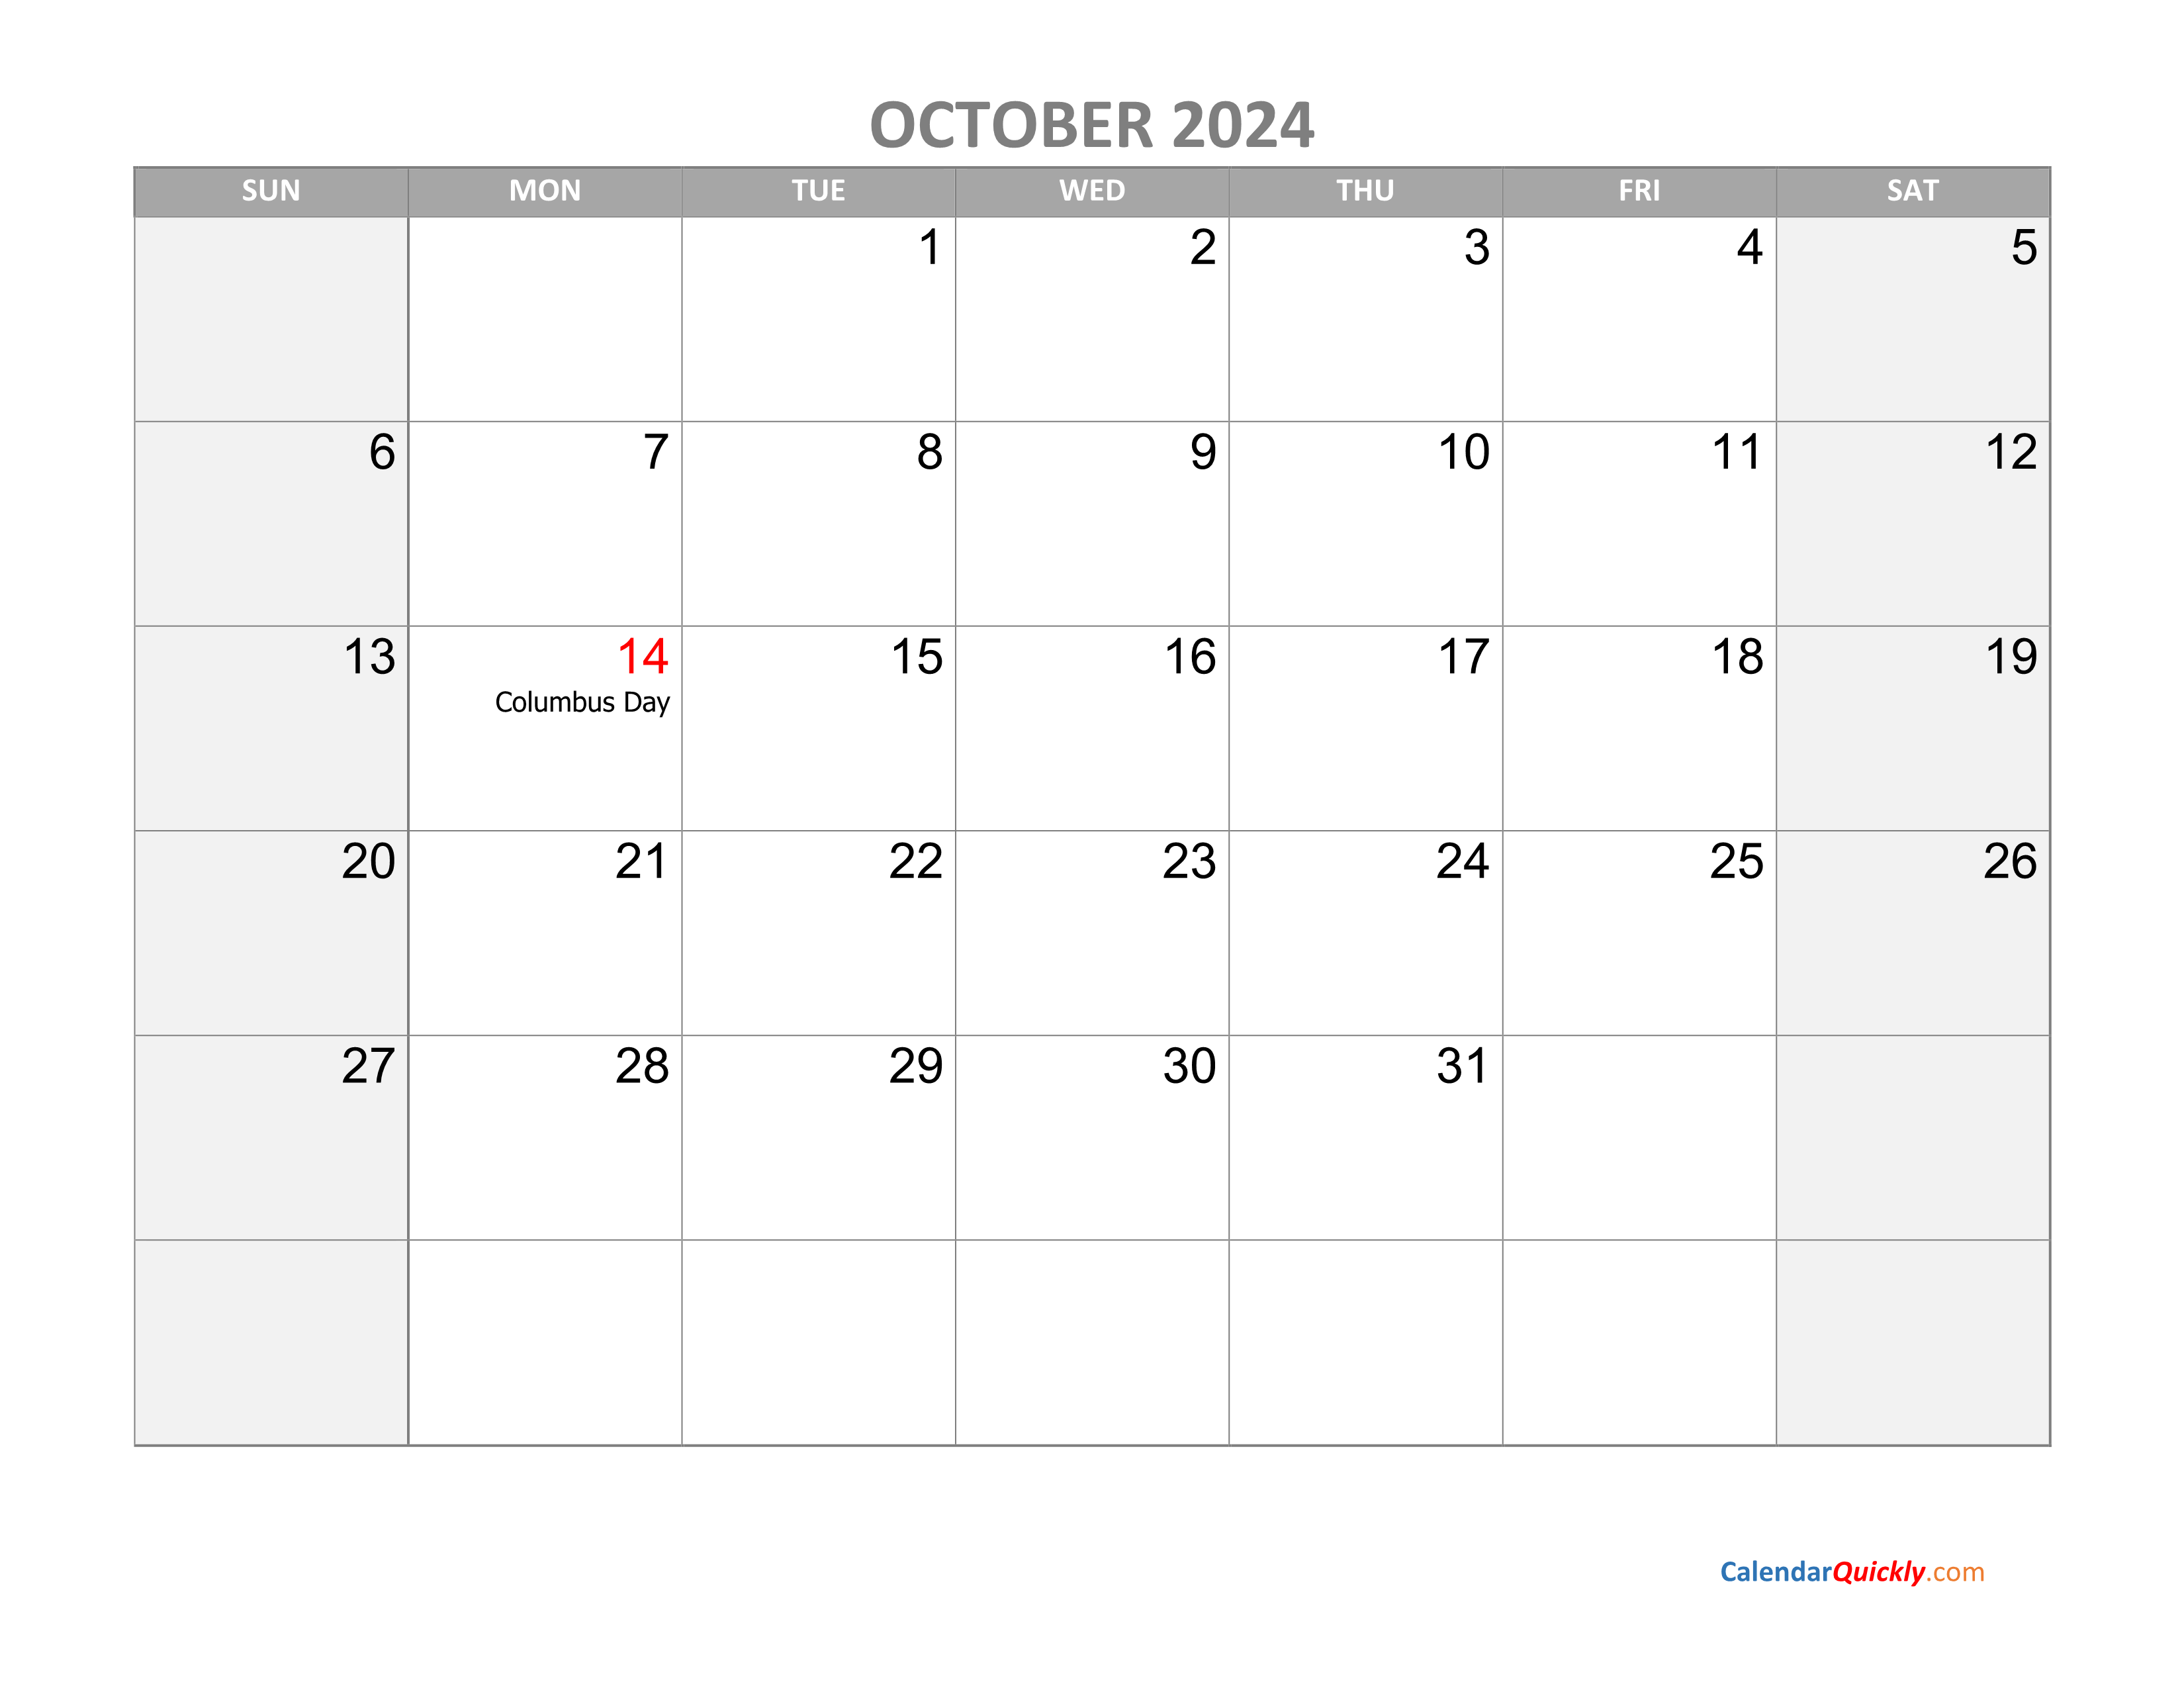 october-calendar-2024-with-holidays-calendar-quickly